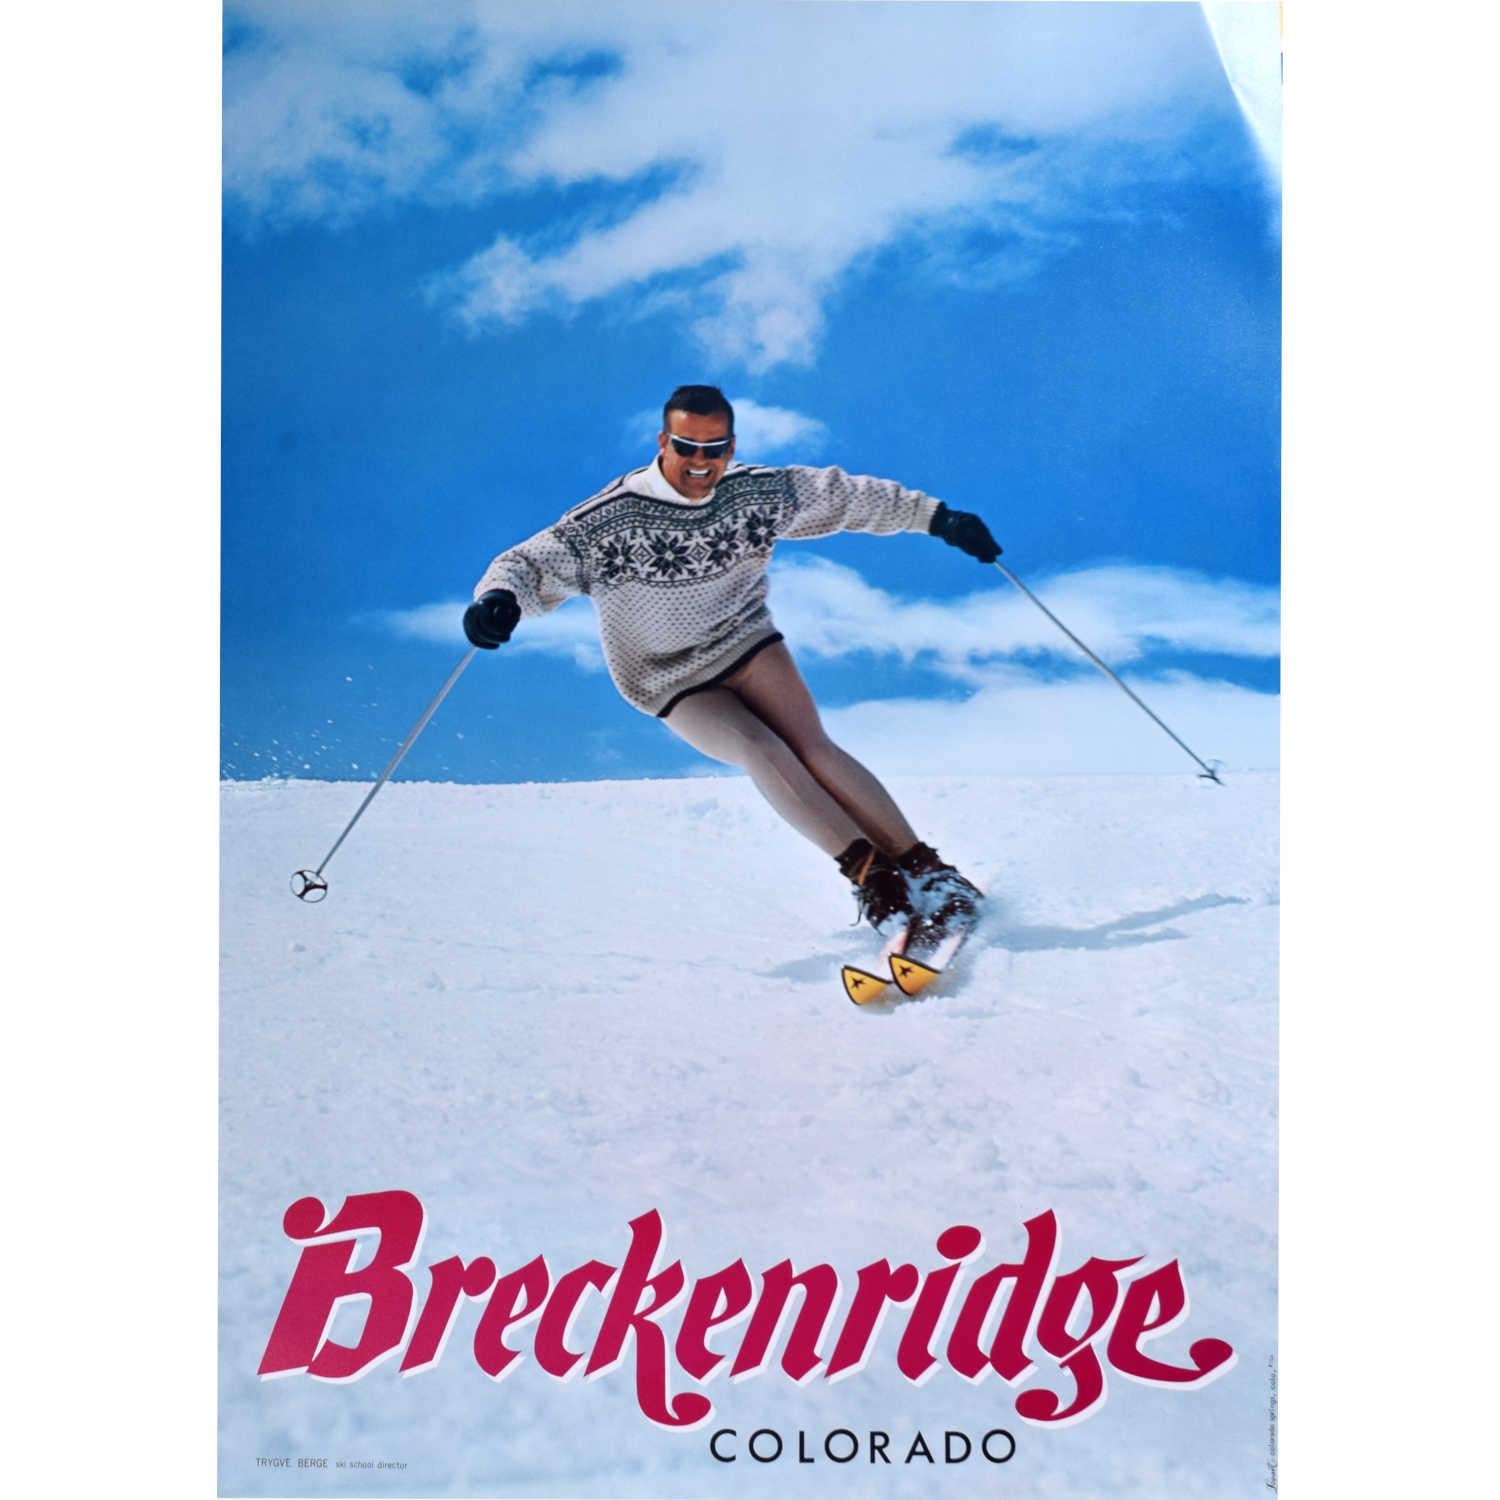 Unknown Landscape Print - Breckenridge, Colorado Vintage Ski Poster USA (1967)